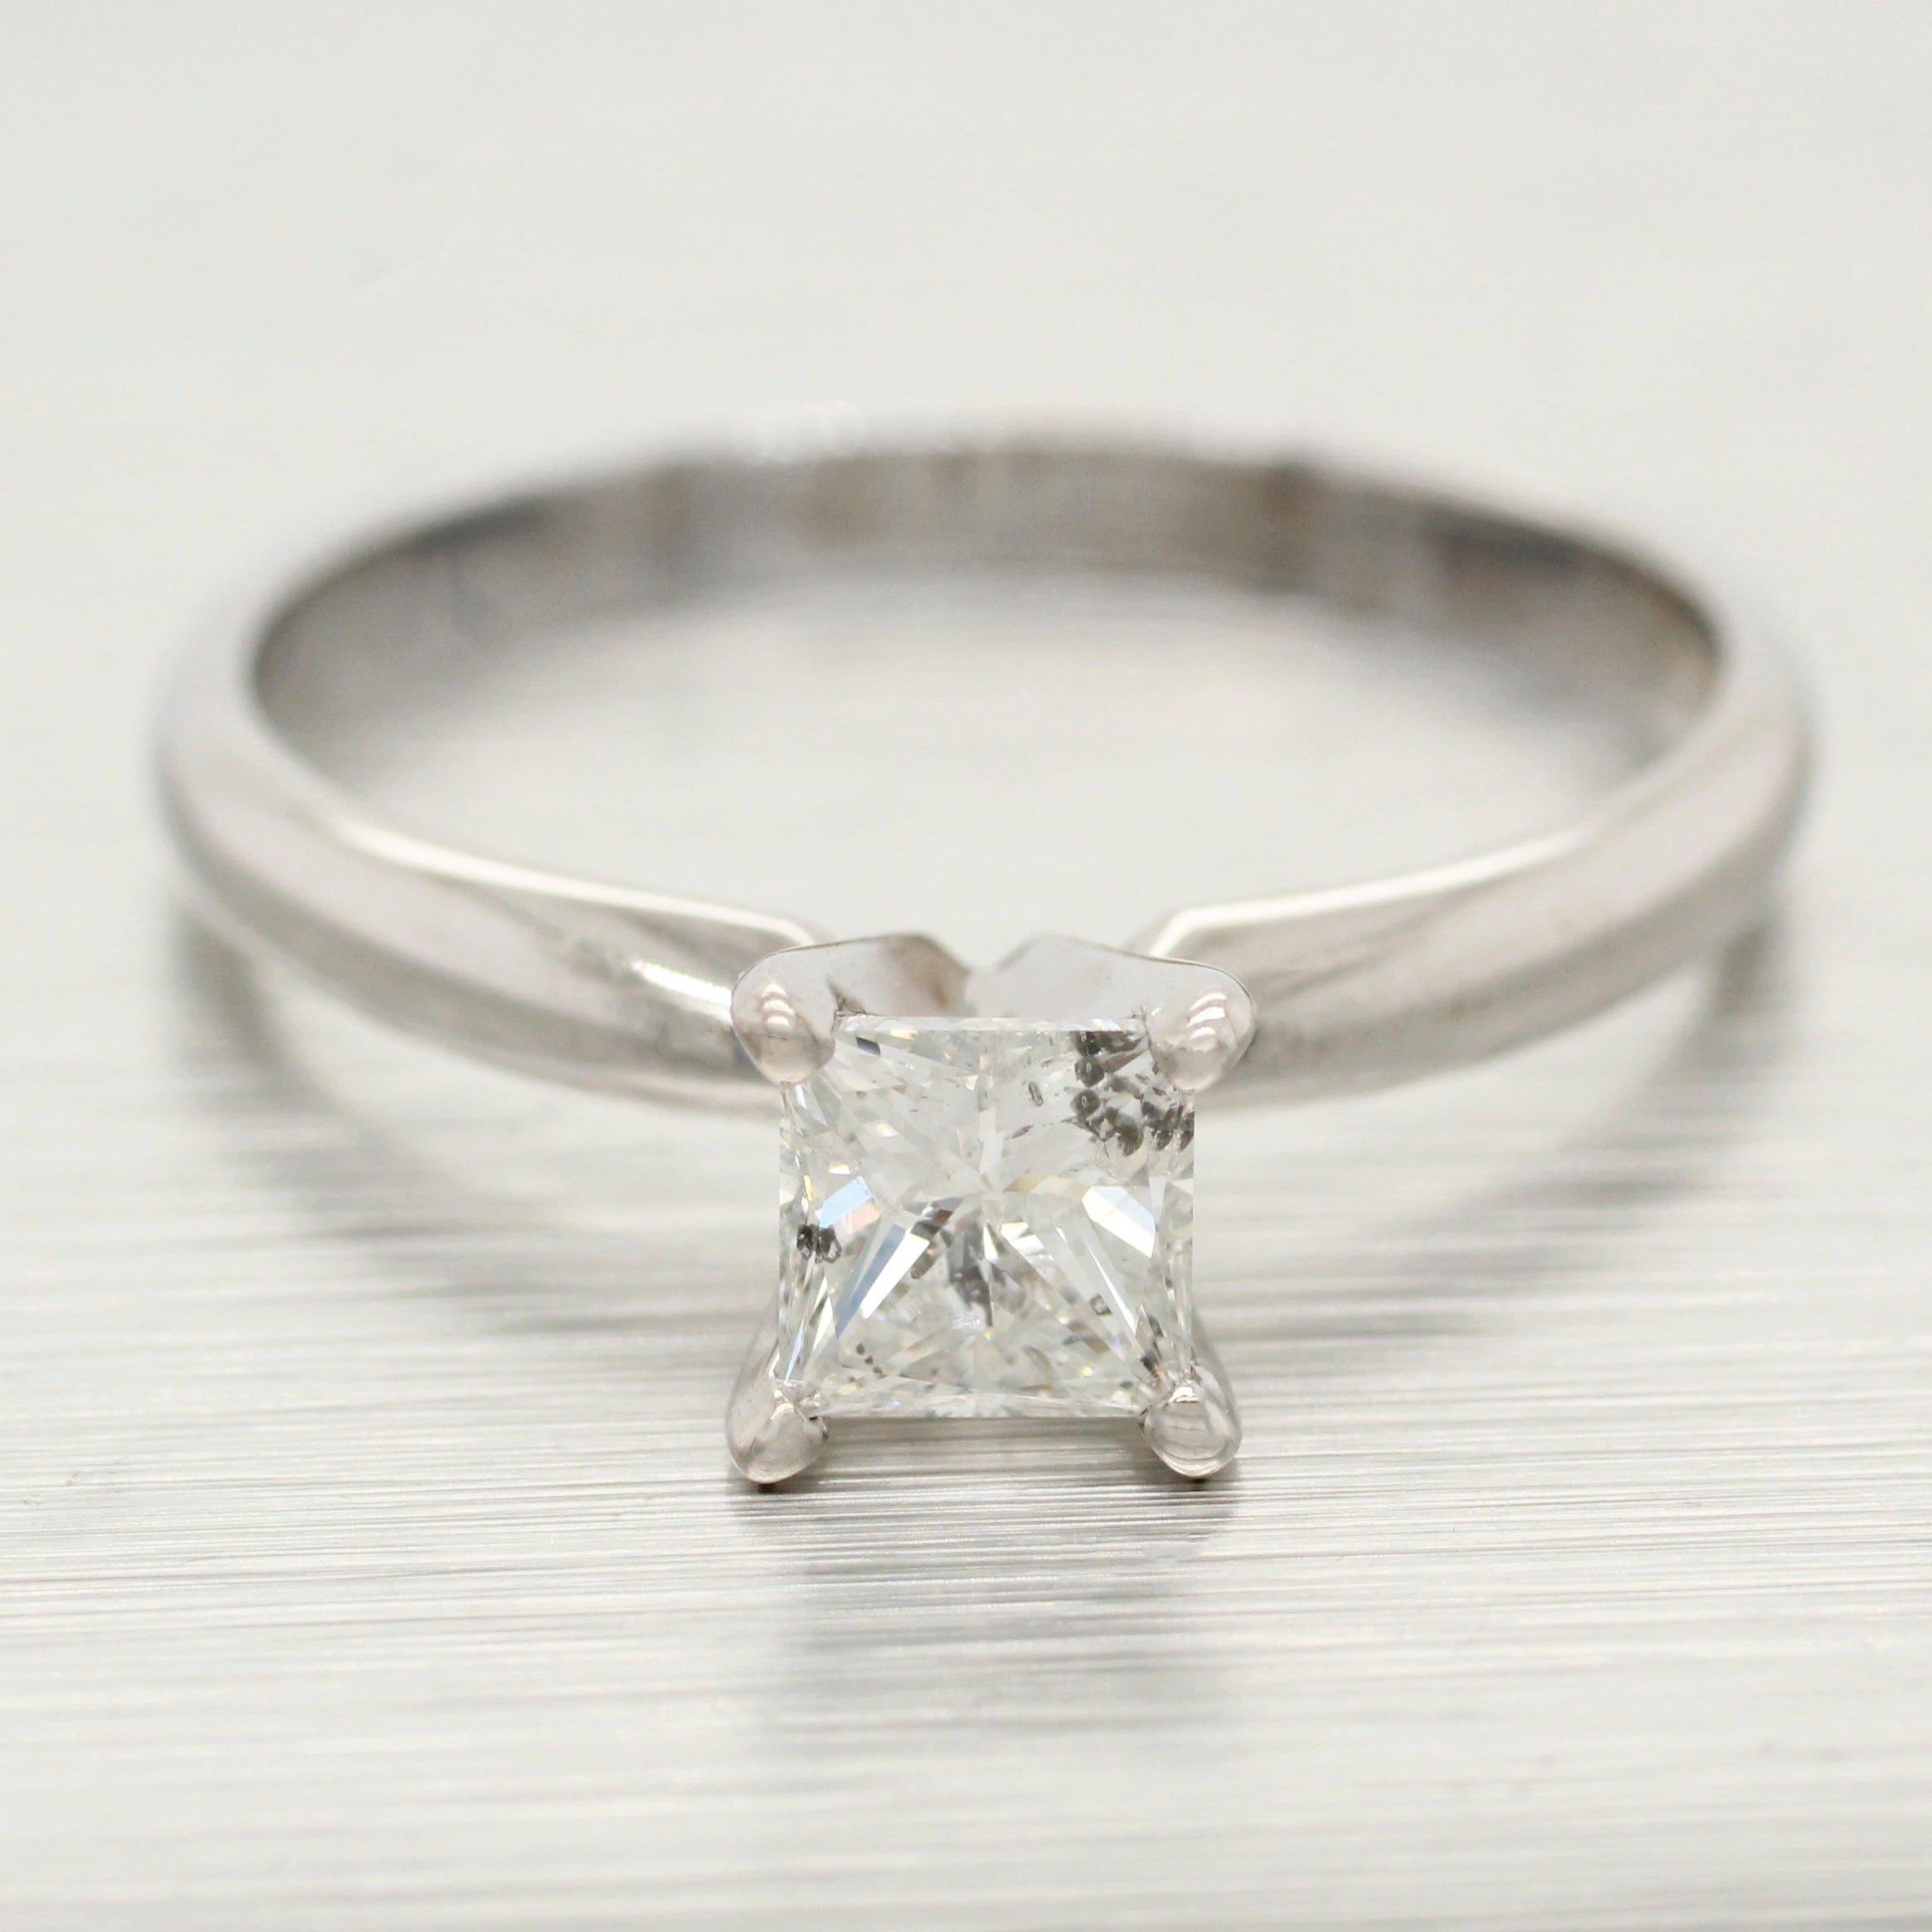 Vintage 0.53ct Asscher Diamond Solitaire Engagement Ring - 14k White Gold | 6.75